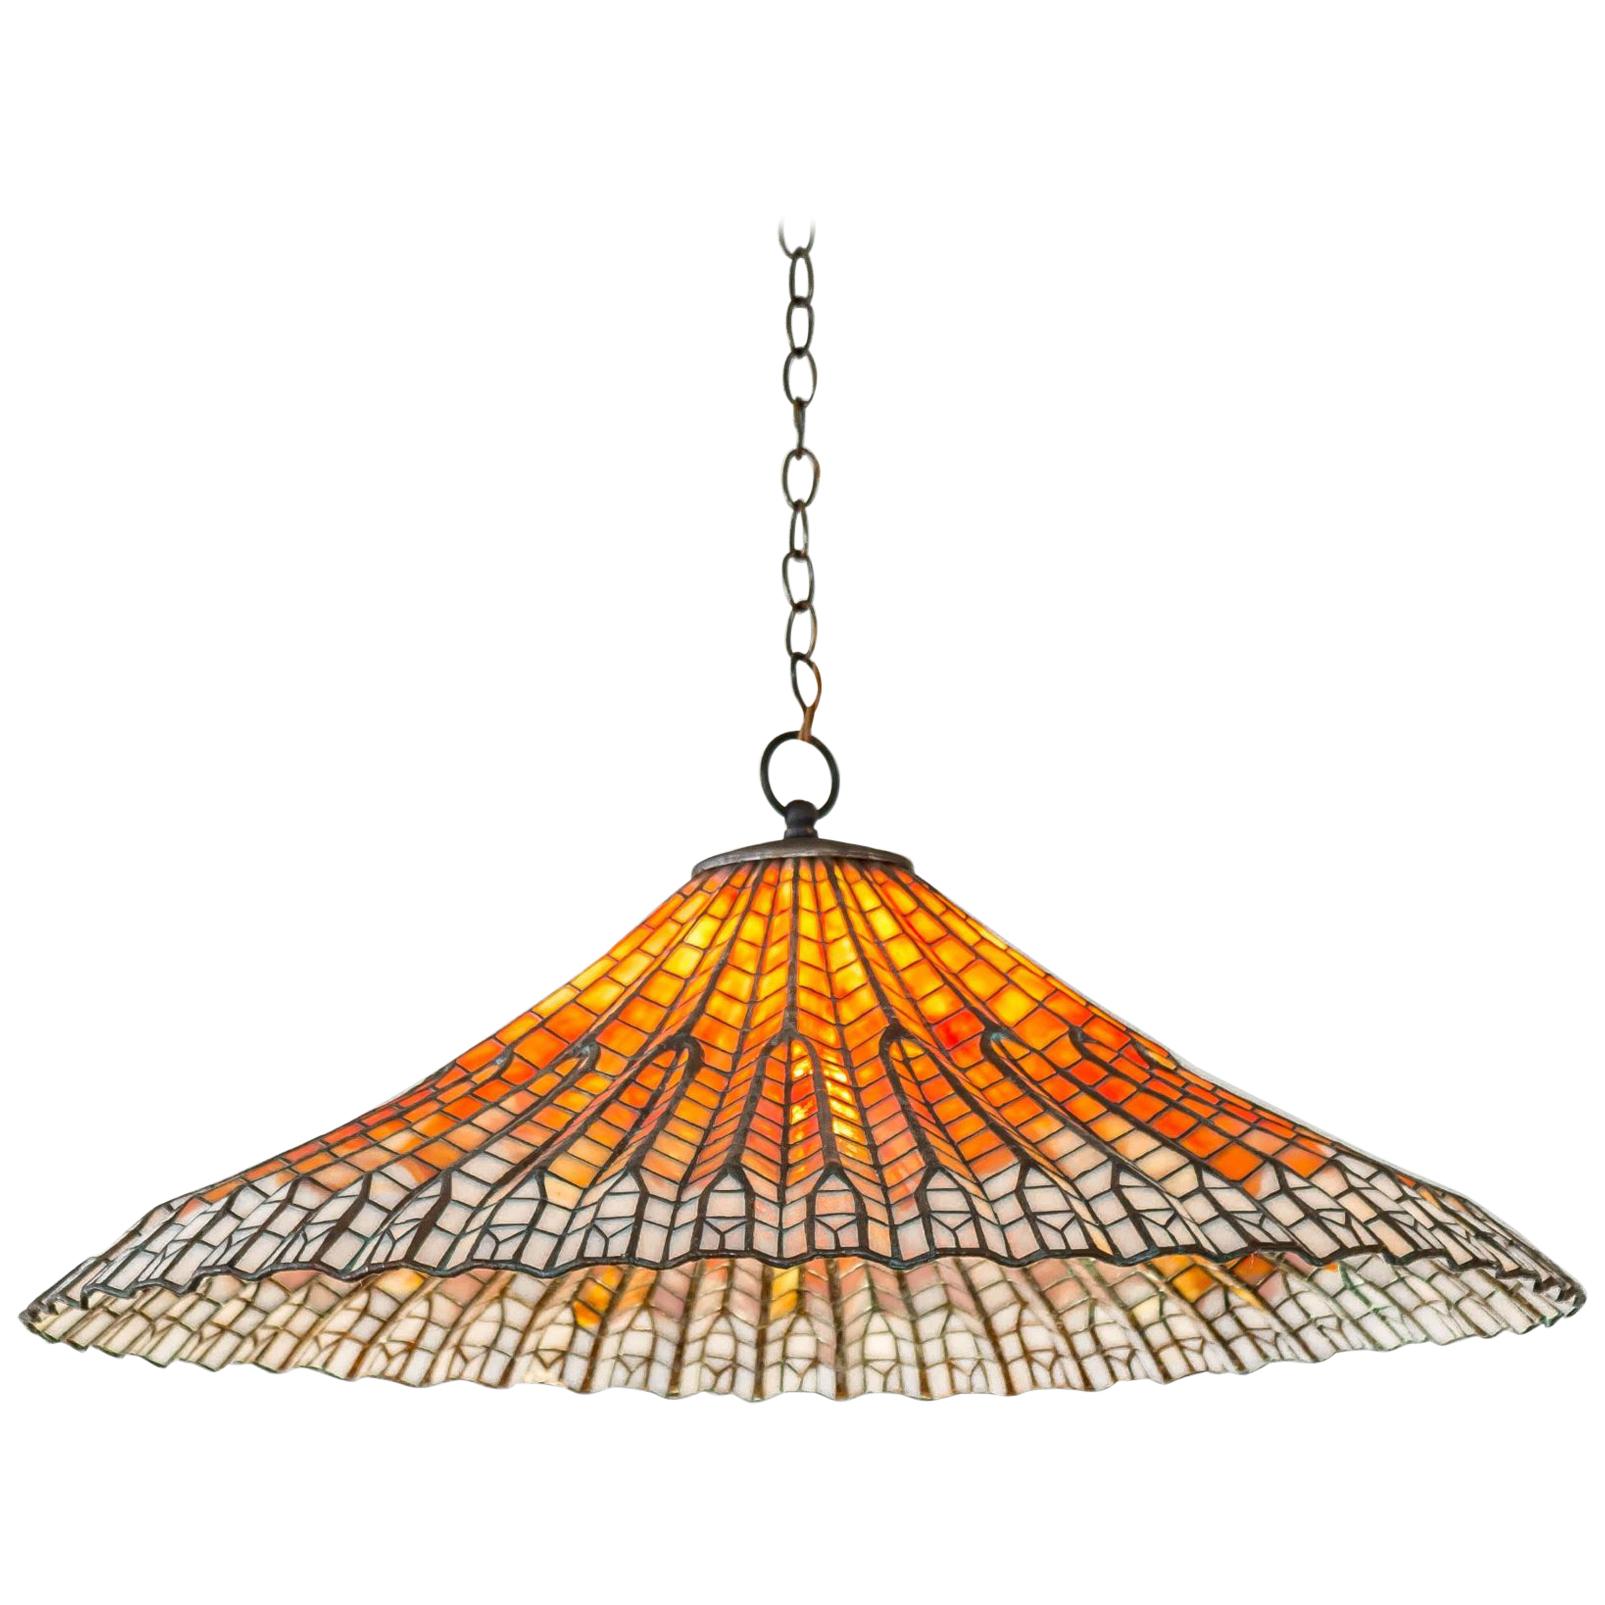 Leaded Slag Glass Hanging Light in Manner of Tiffany Studios For Sale